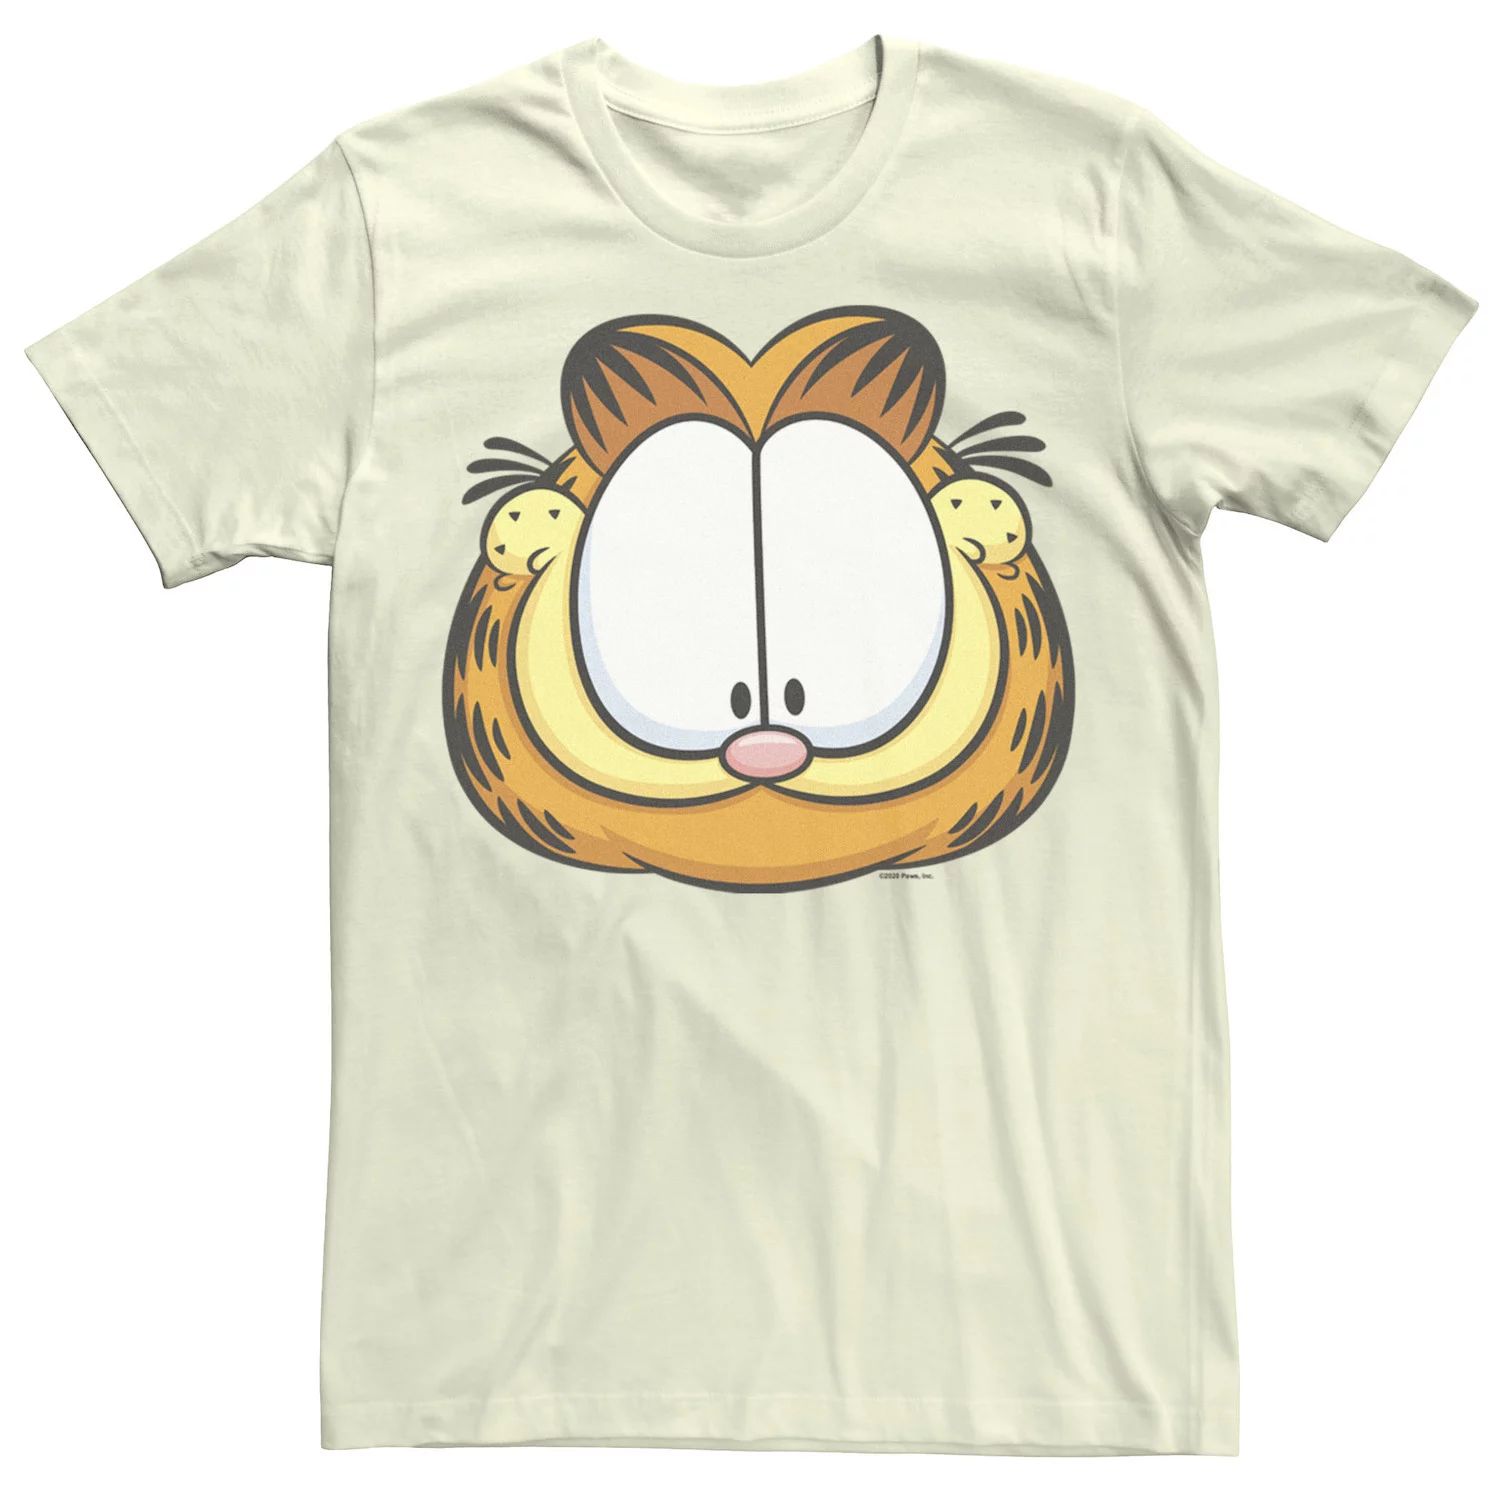 Мужская футболка Garfield с большим лицом Licensed Character